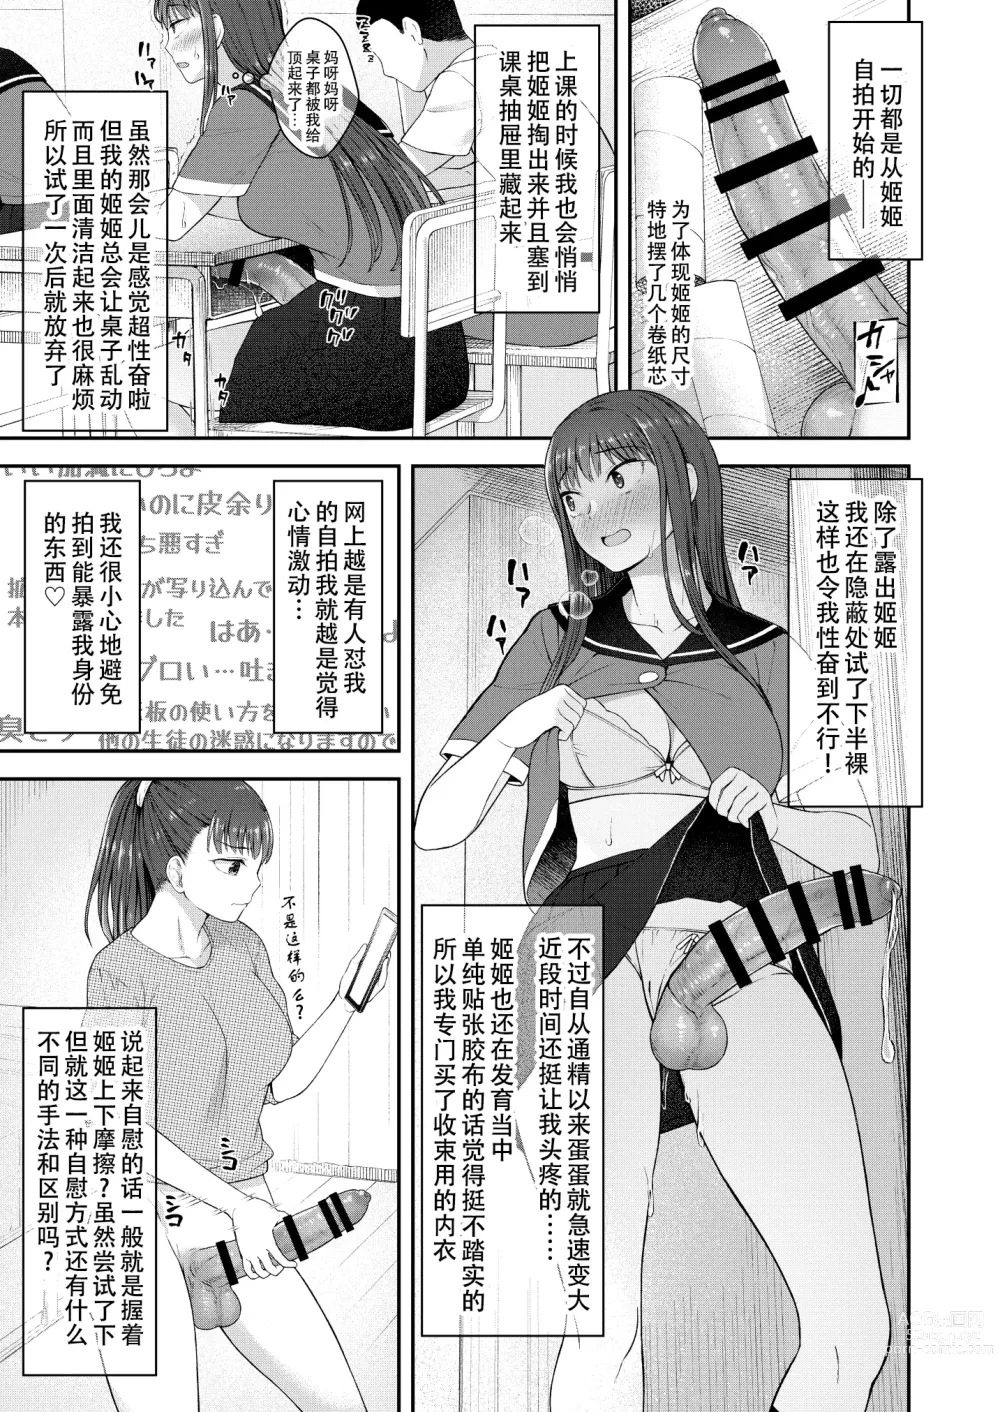 Page 5 of doujinshi 放课后的自拍少女2 那个露出男性性器并且自拍的变态只有她知道其真面目.